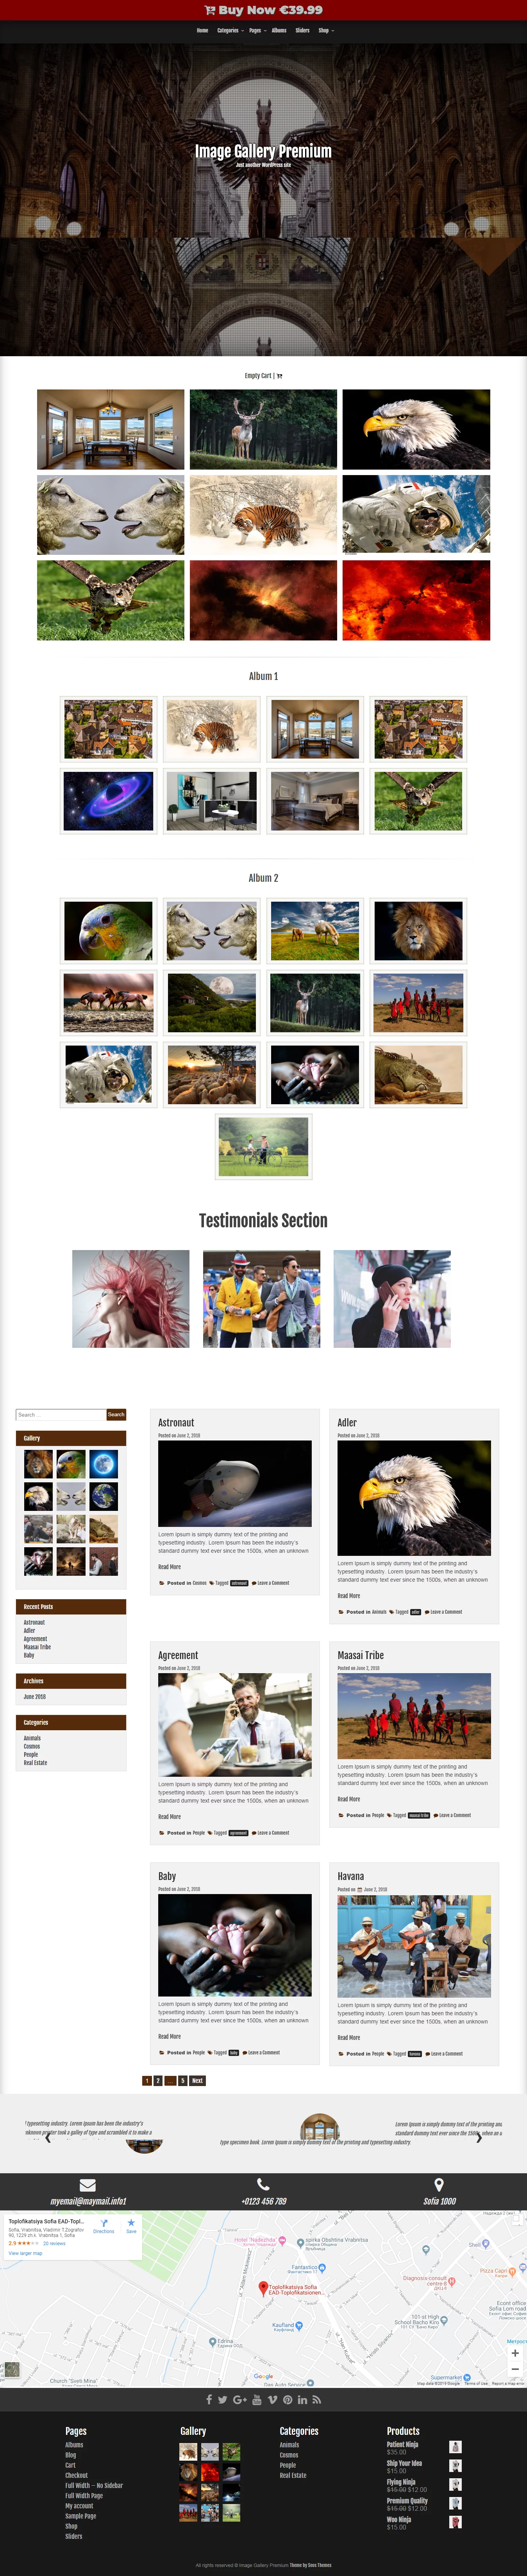 Image Gallery - Best Free Gallery WordPress Theme